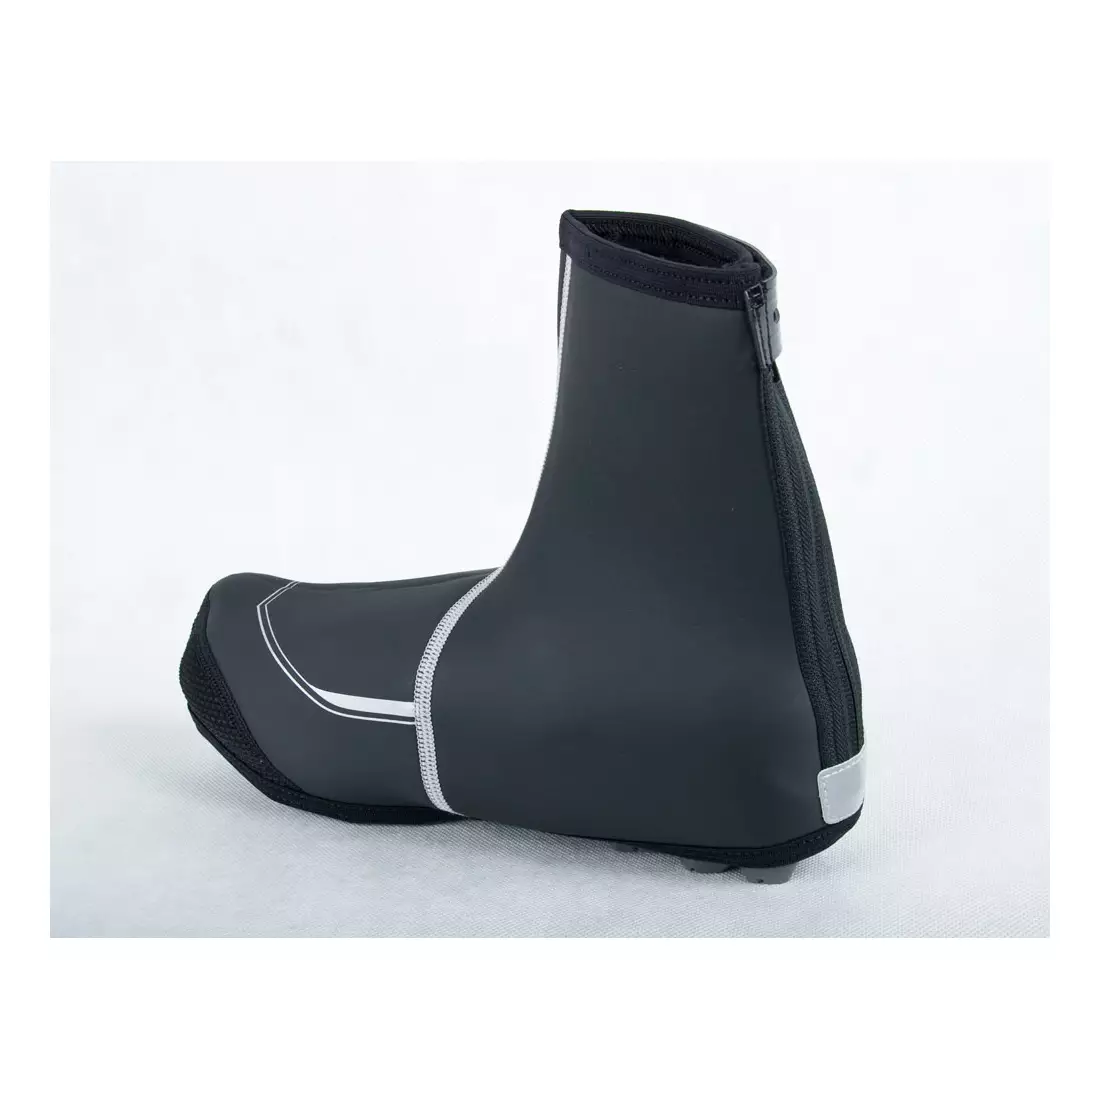 SHIMANO TRAIL NPU+ waterproof neoprene MTB shoe covers CW-FABW-MS52UL